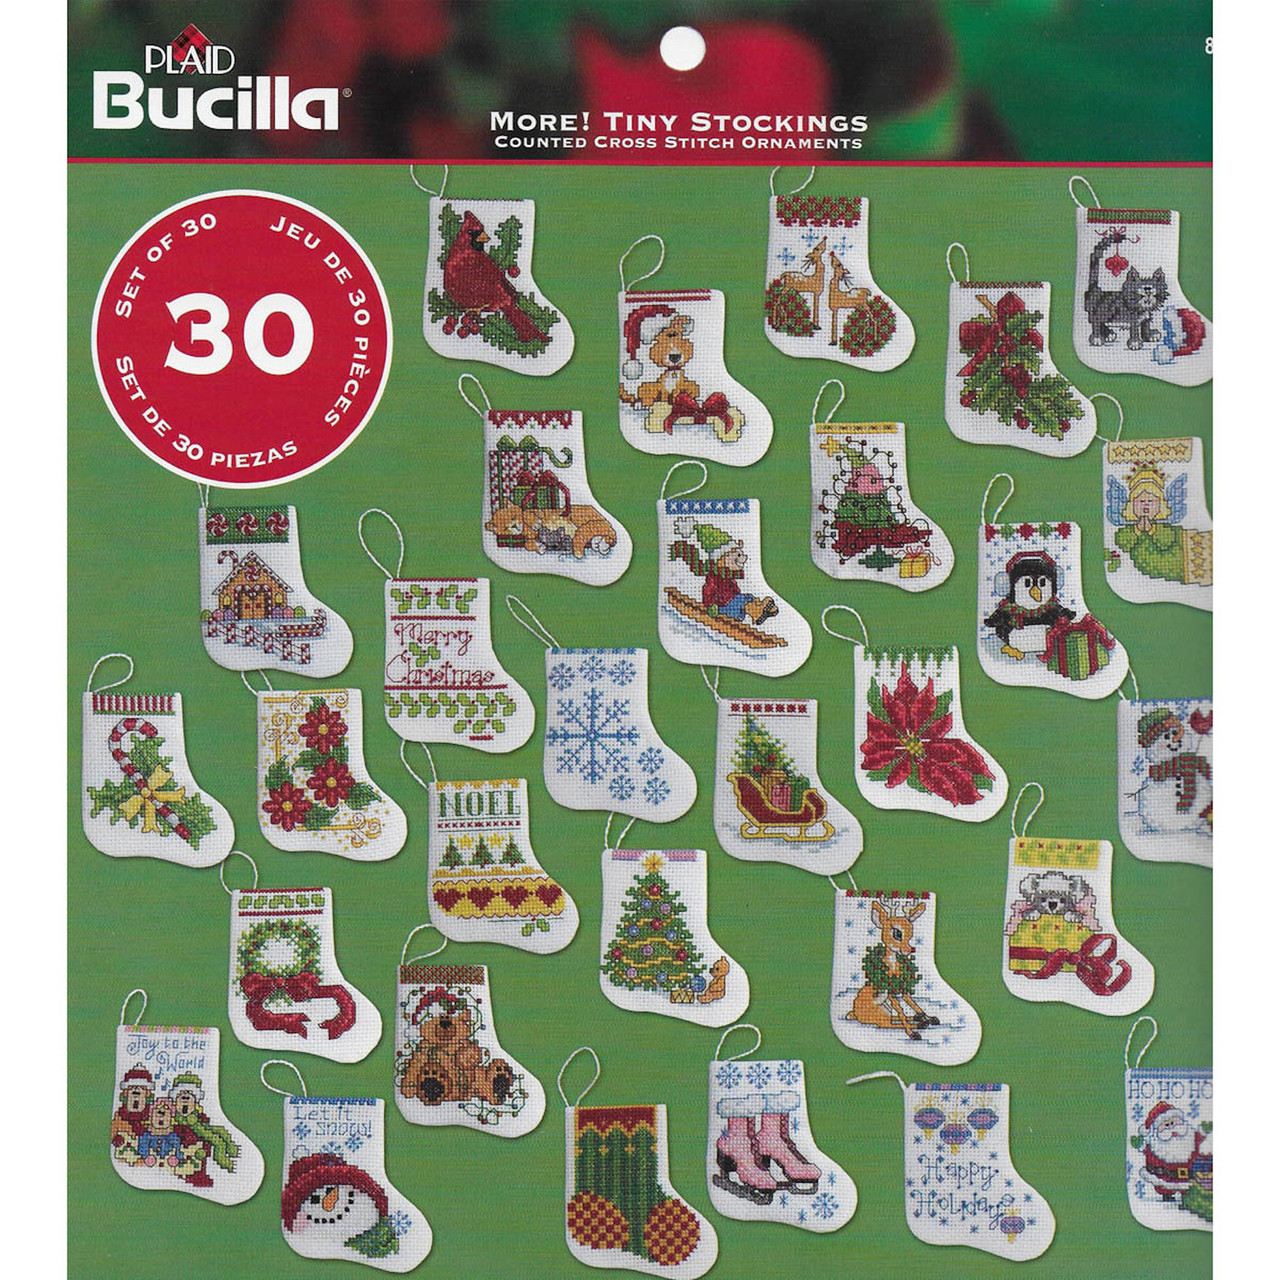 Plaid / Bucilla - More! Tiny Stocking Ornaments